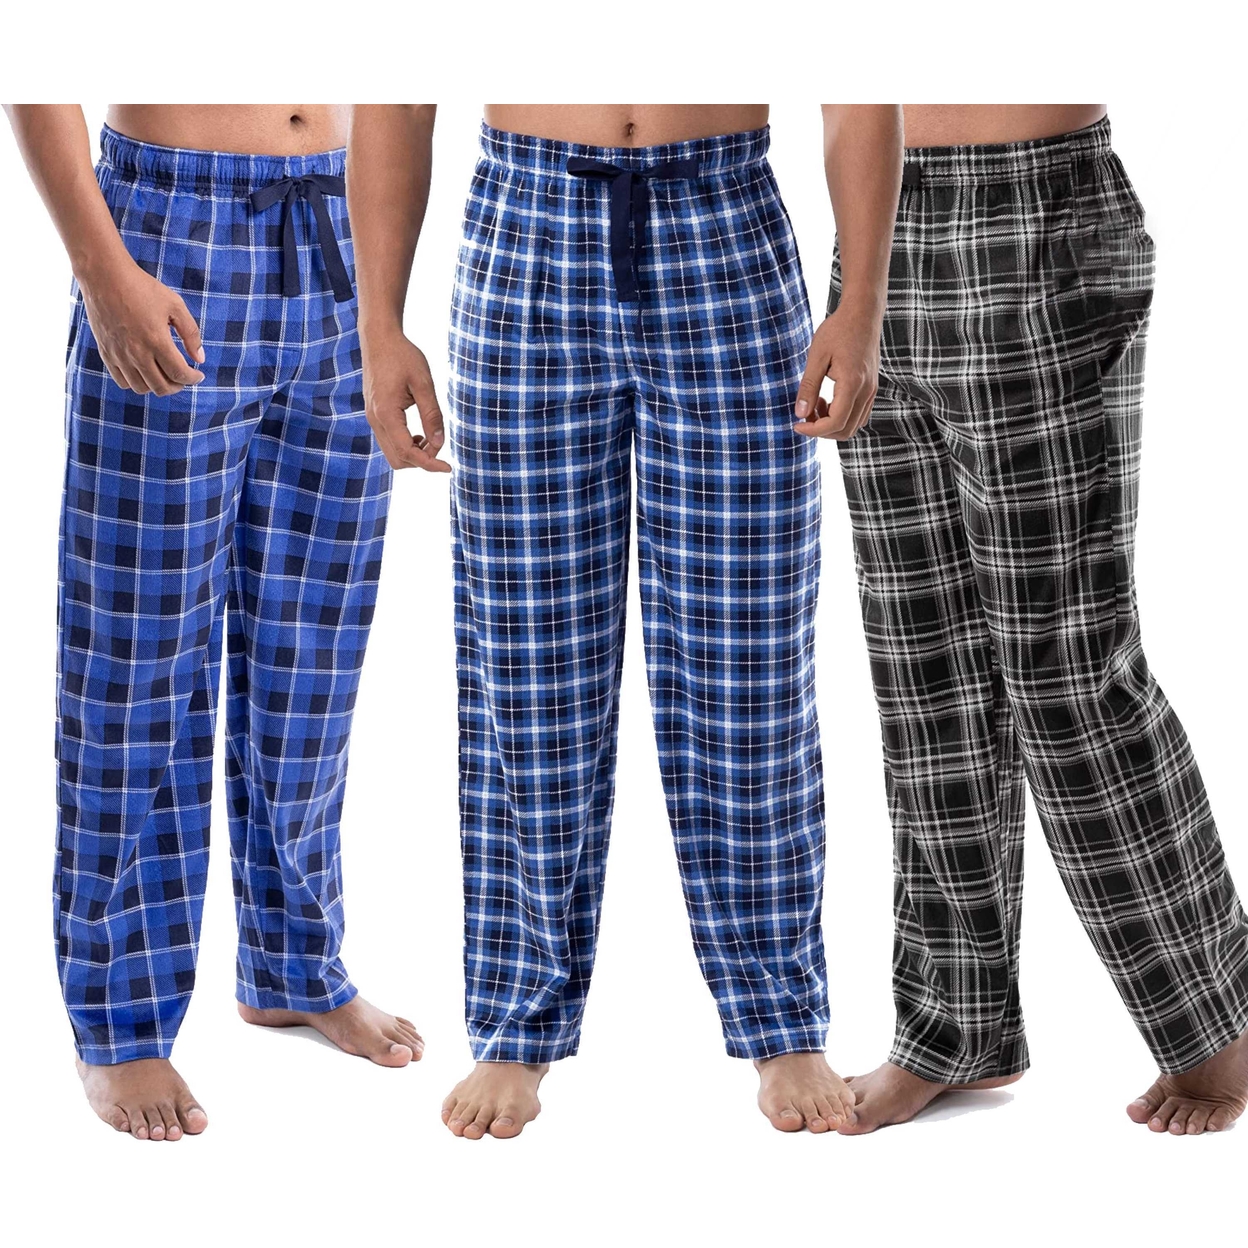 3-Pack: Men's Ultra-Soft Cozy Lounge Sleep Micro Fleece Plaid Pajama Pants - Medium